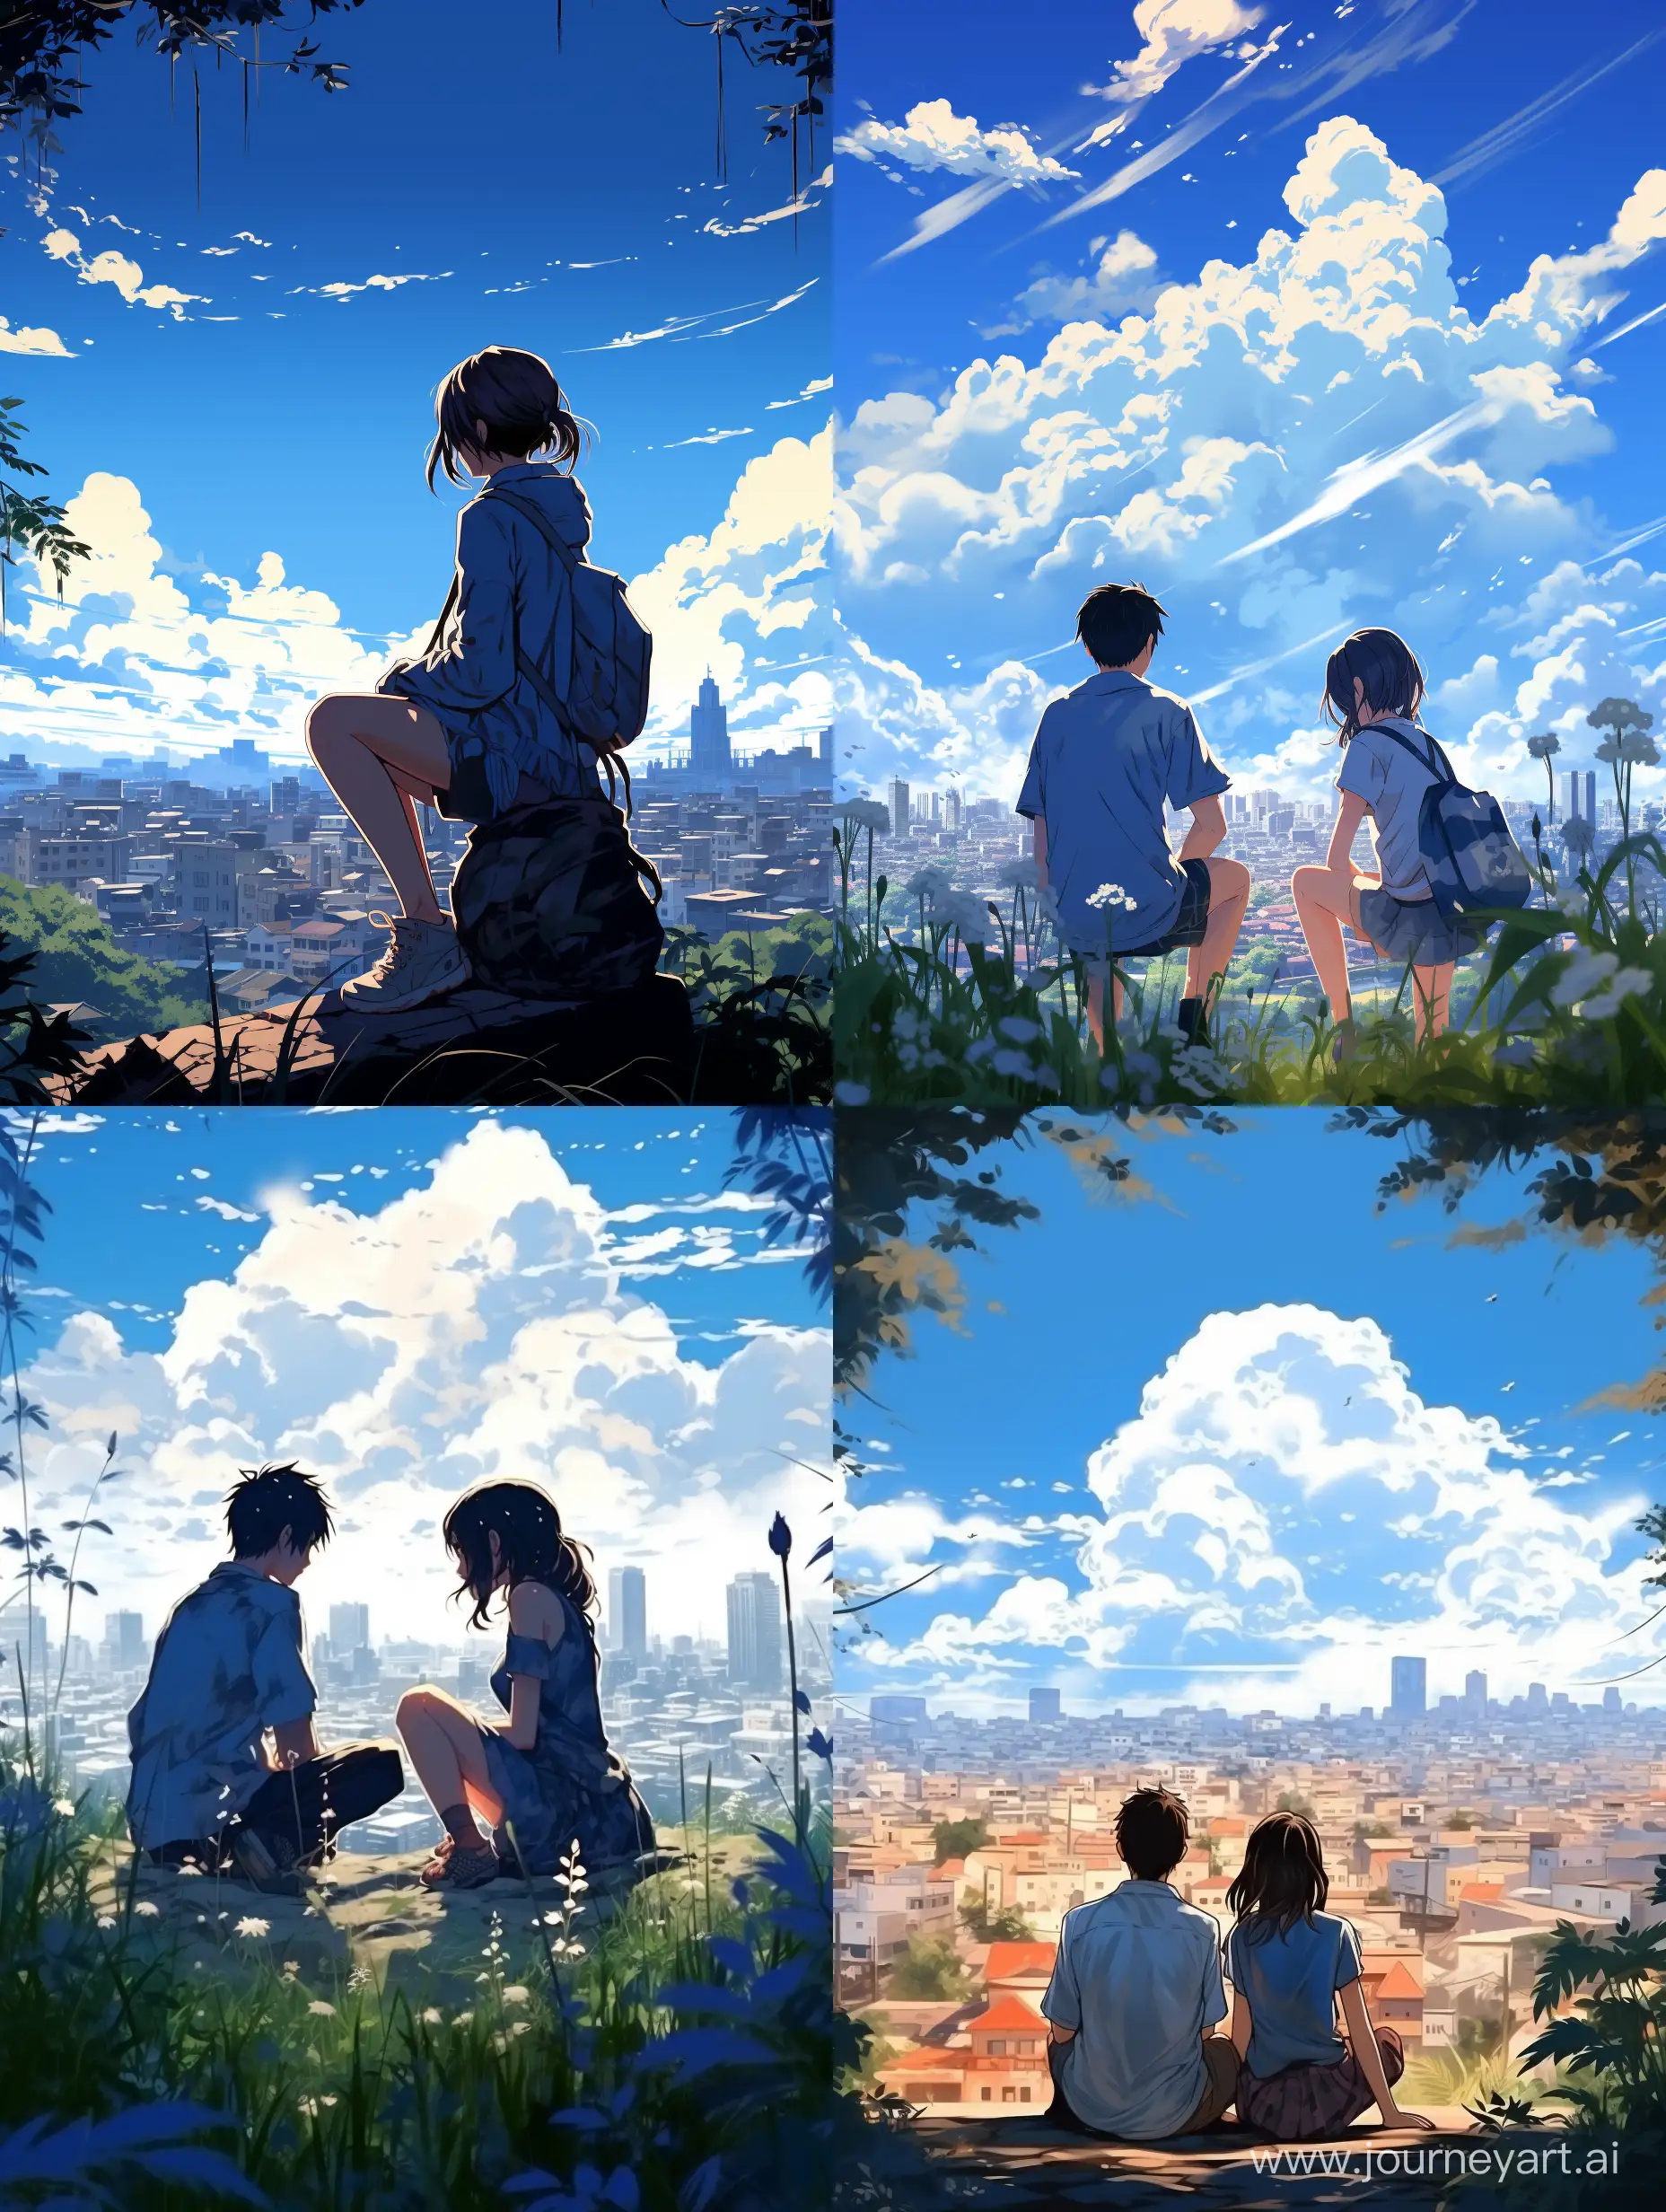 Anime, summer, background city, two teenagers, playing, style of Makoto Shinkai Byousoku 5 Centimeter, blue sky, advanced sense of color scheme, national trendy illustration, 8k, rich details,  natural lighting, minimalism --s 400